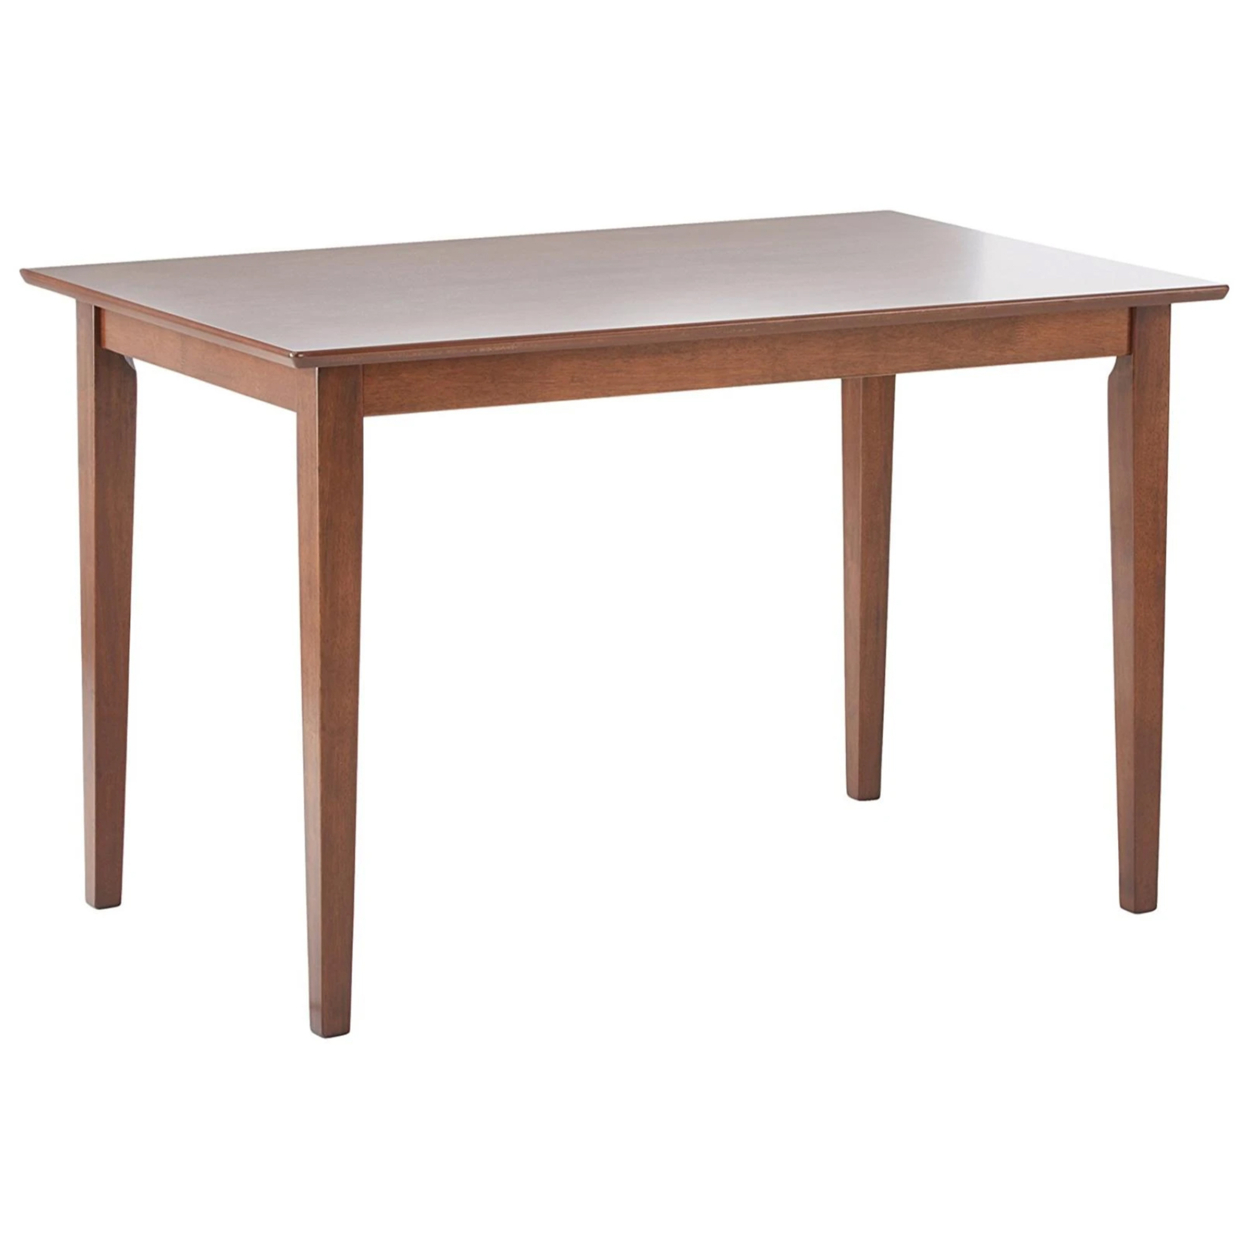 Classy 5 Piece Wooden Dining Table Set, Brown- Saltoro Sherpi